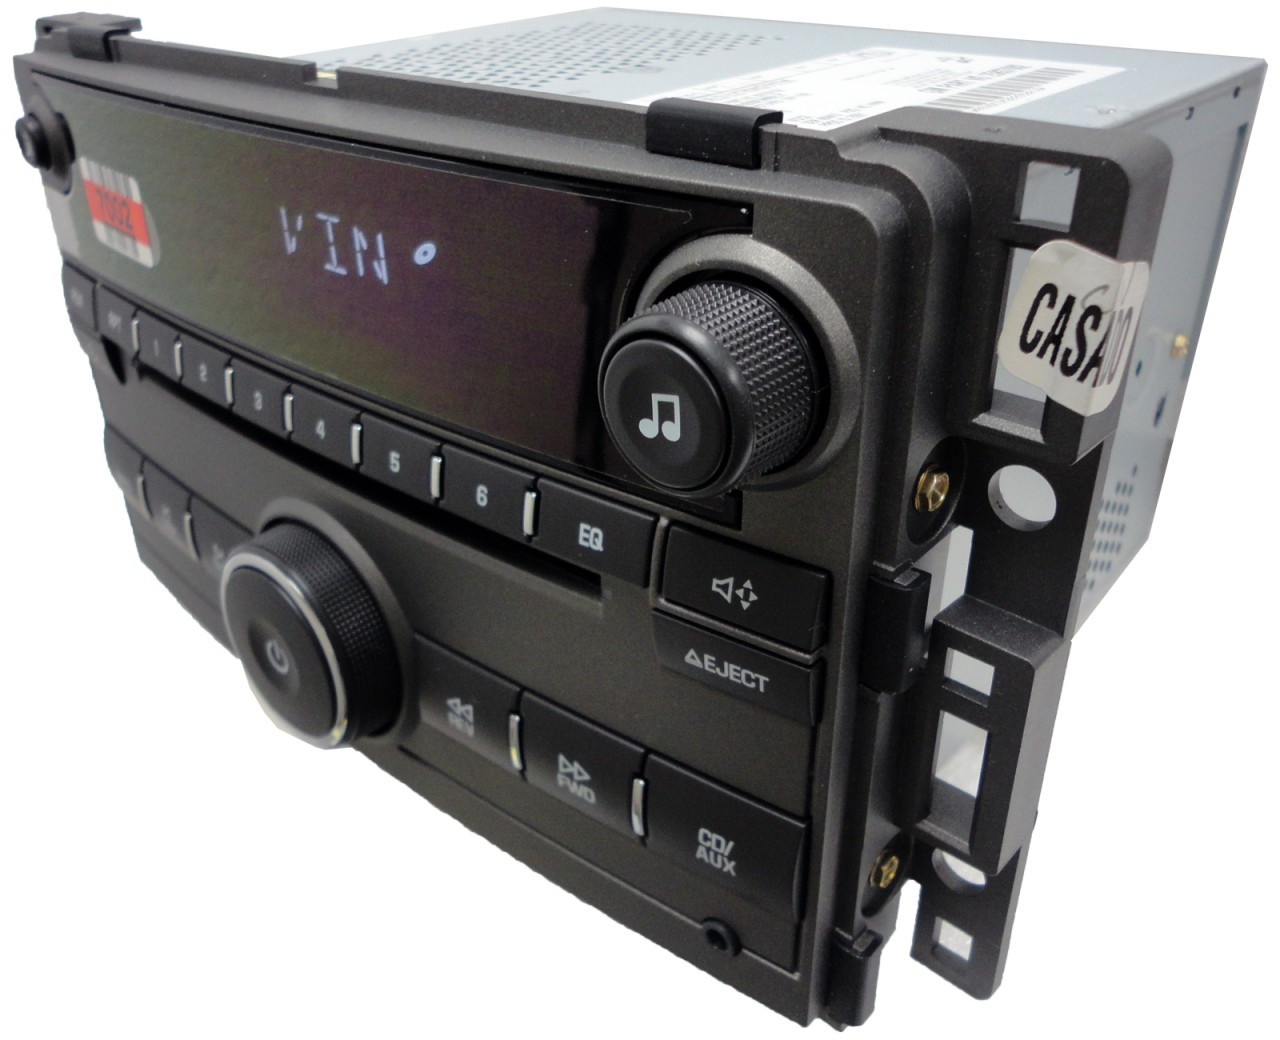 25837002 09 Pontiac Solstice Radio CD Player Auxiliary Input